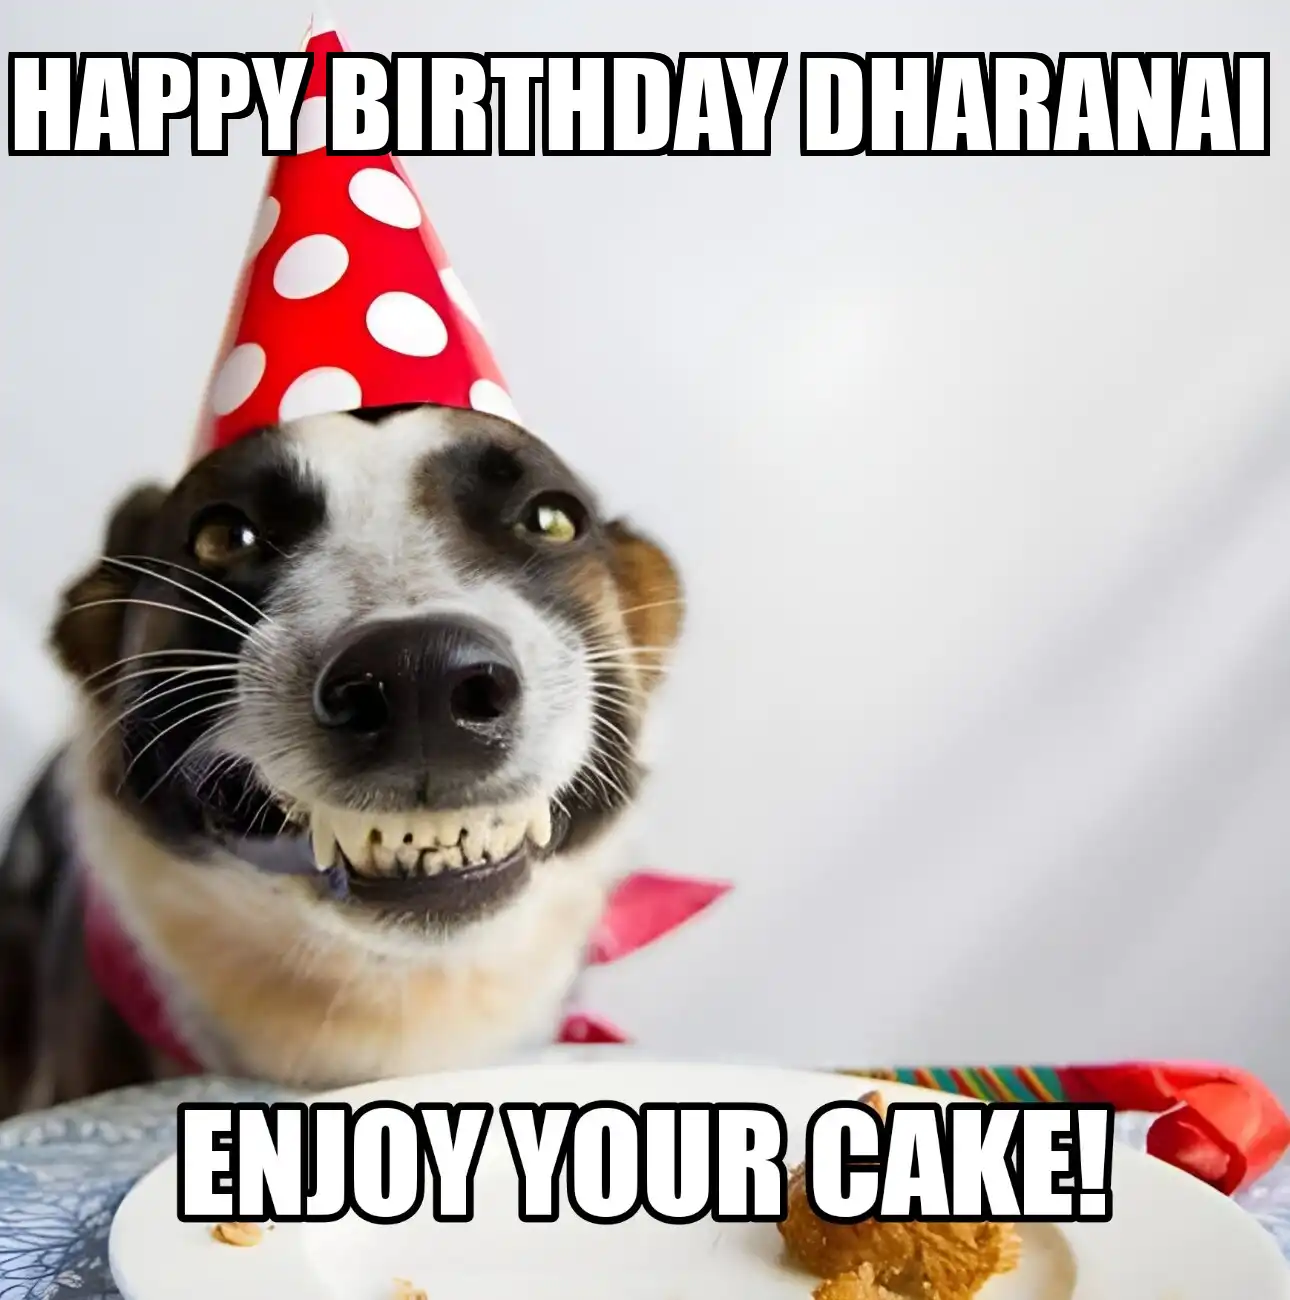 Happy Birthday Dharanai Enjoy Your Cake Dog Meme